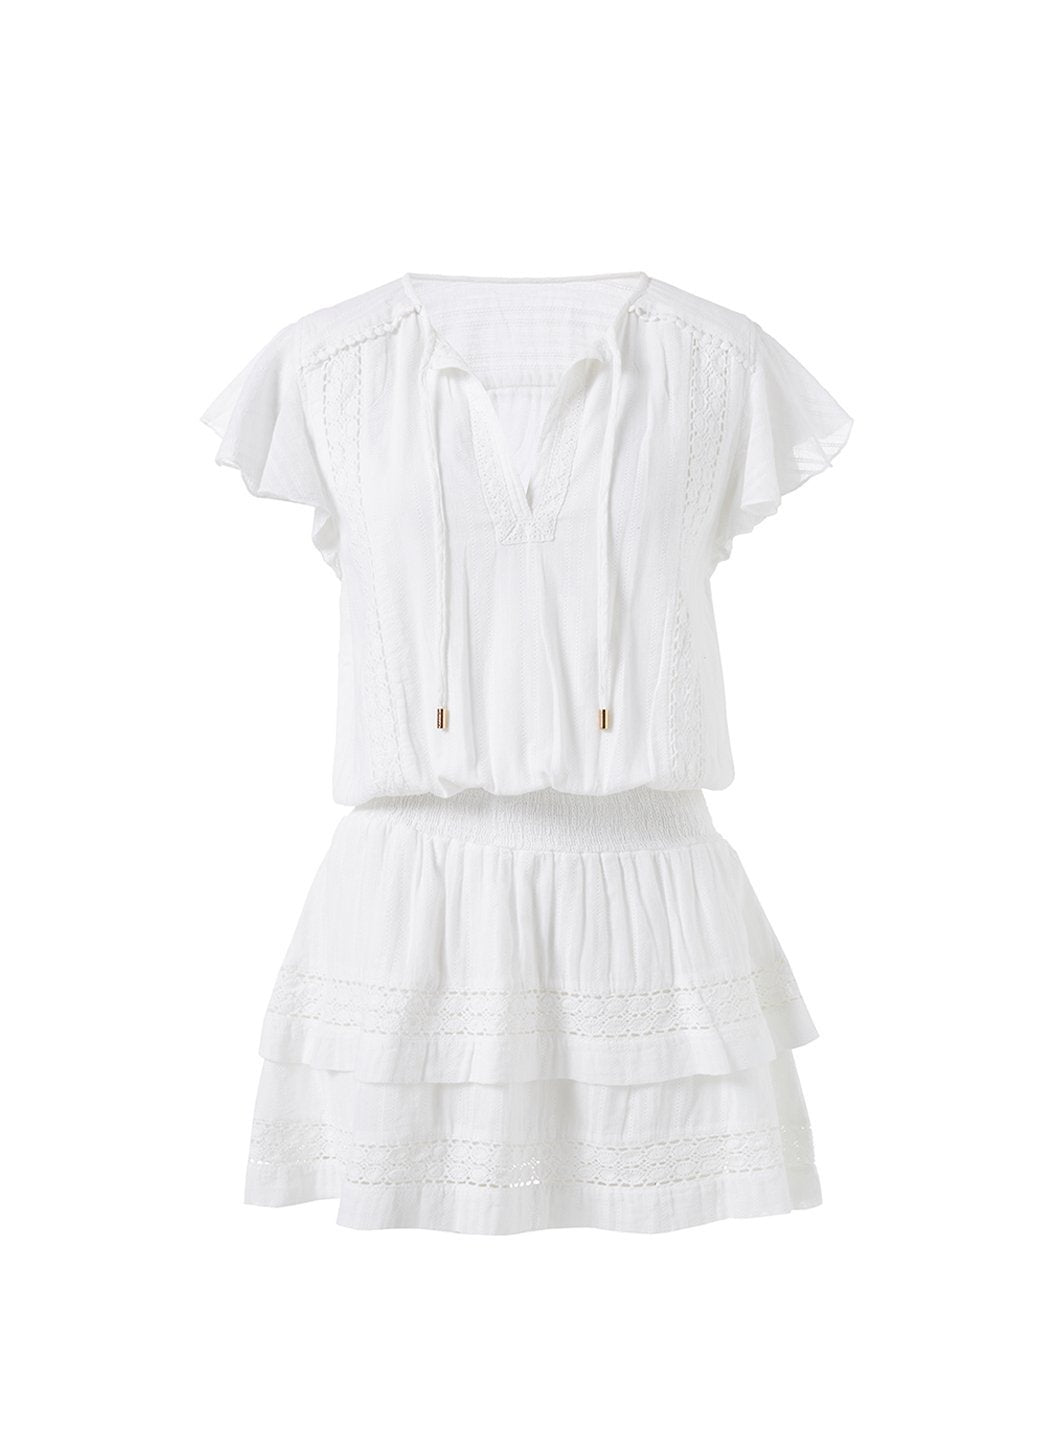 georgie-white-tiered-skirt-short-dress